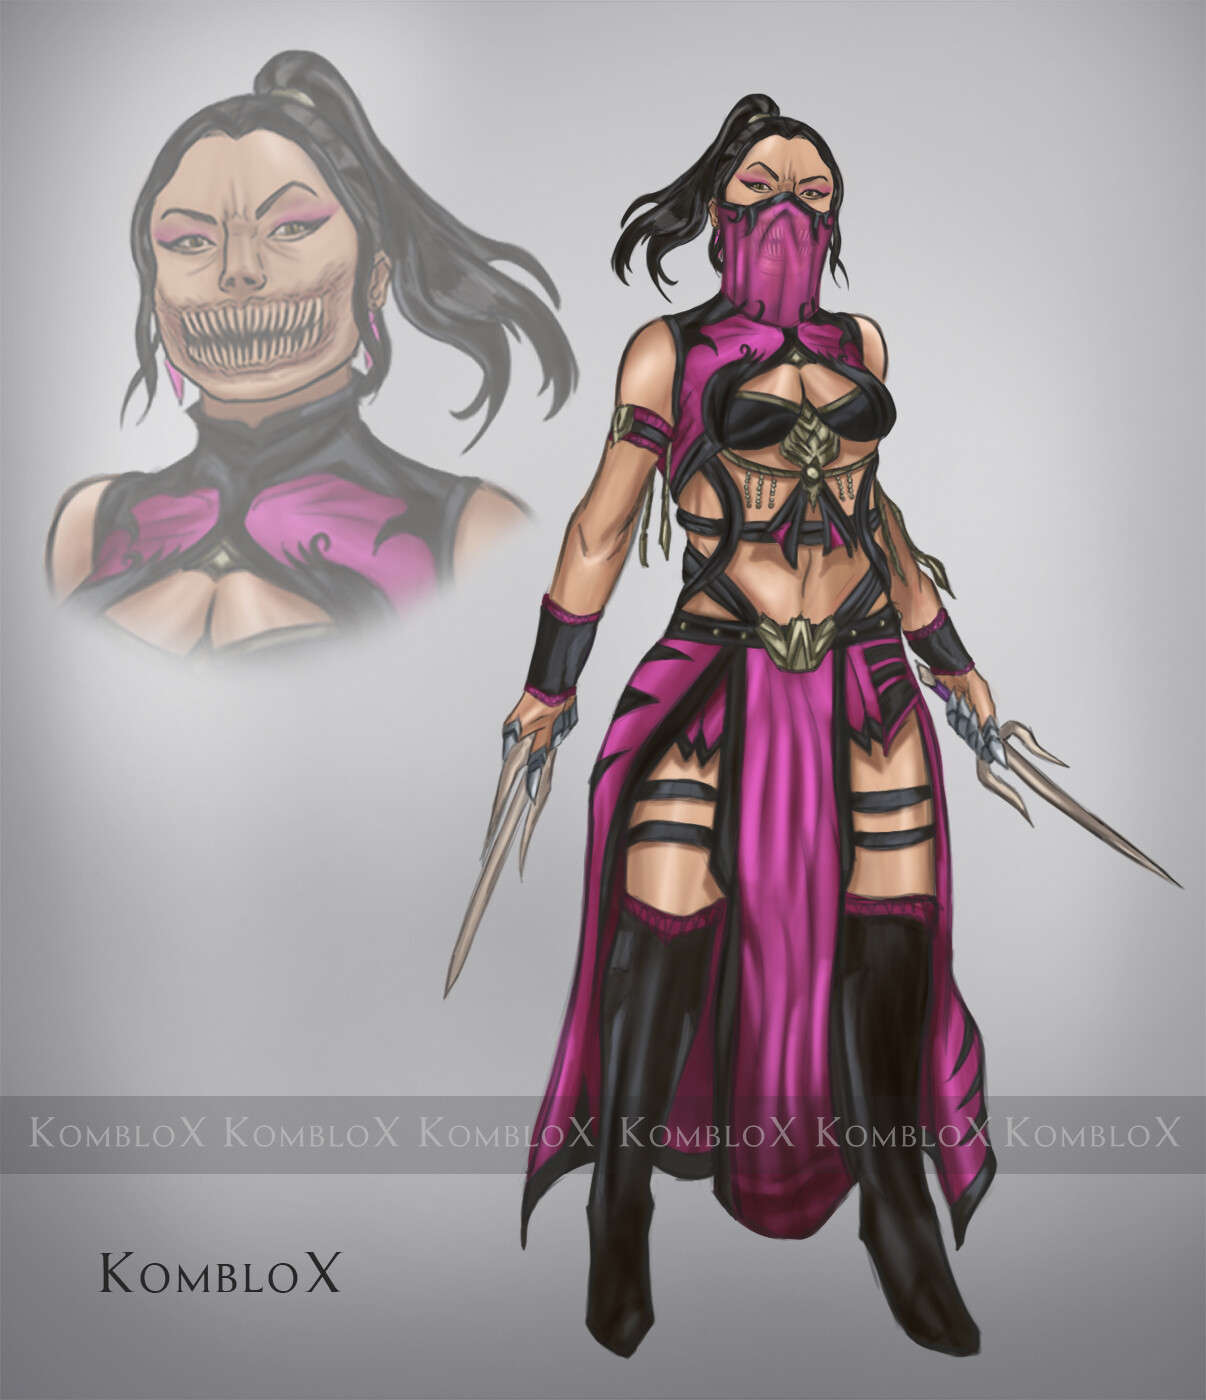 Mileena  Mortal kombat characters, Mortal kombat art, Mortal kombat